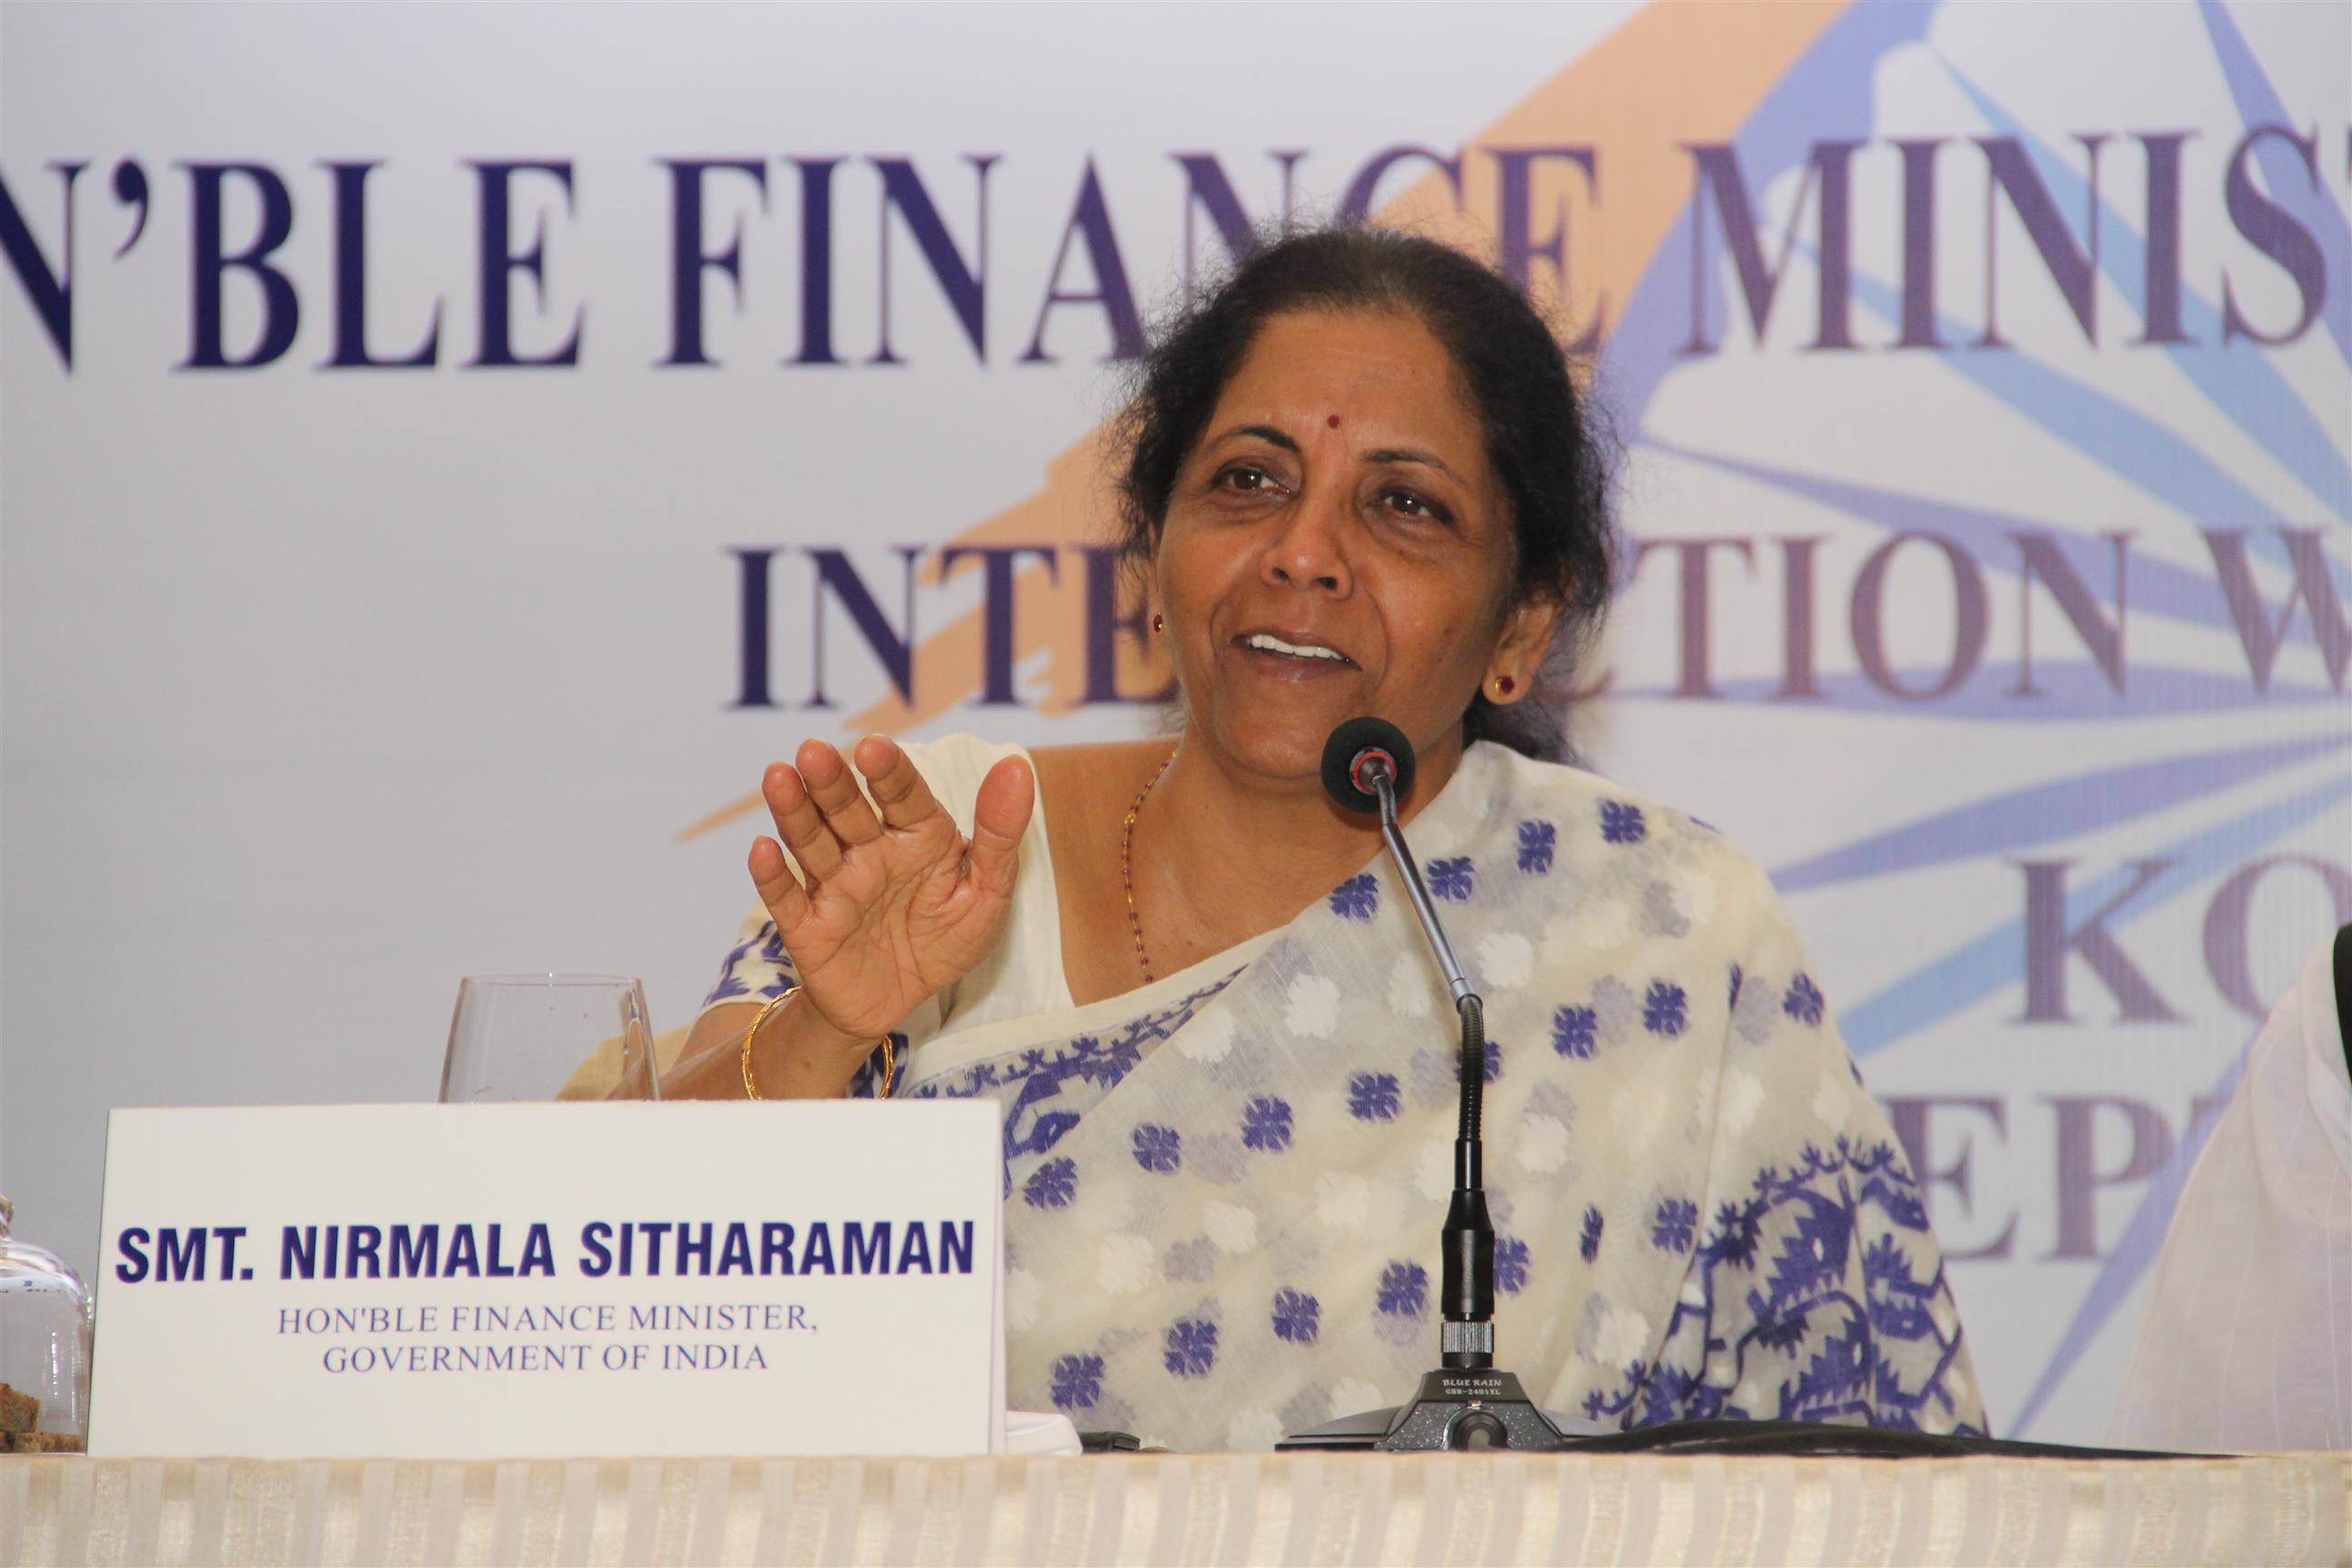 Union Finance Minister, Smt. Nirmala Sitharaman addressing the press conference in Kolkata on September 06, 2016.